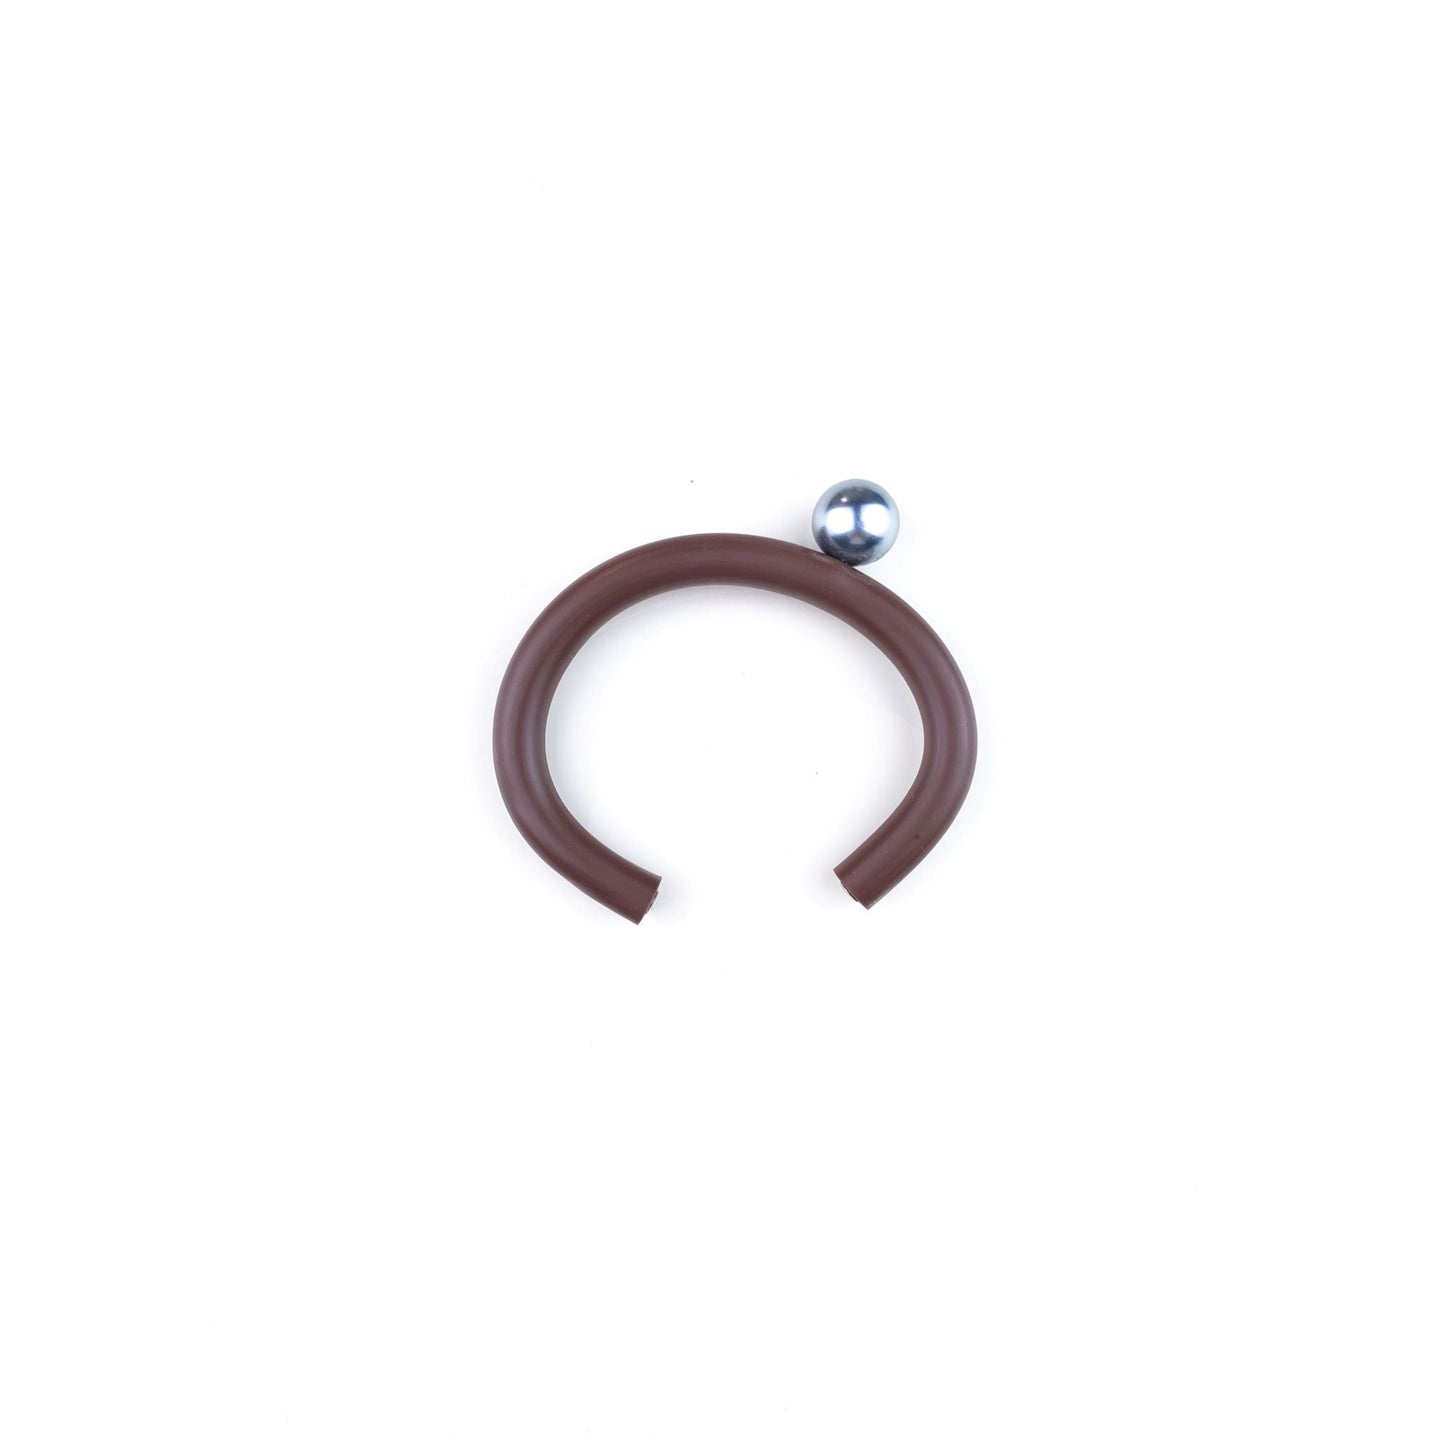 BILICO bracelet - brown / white pearl